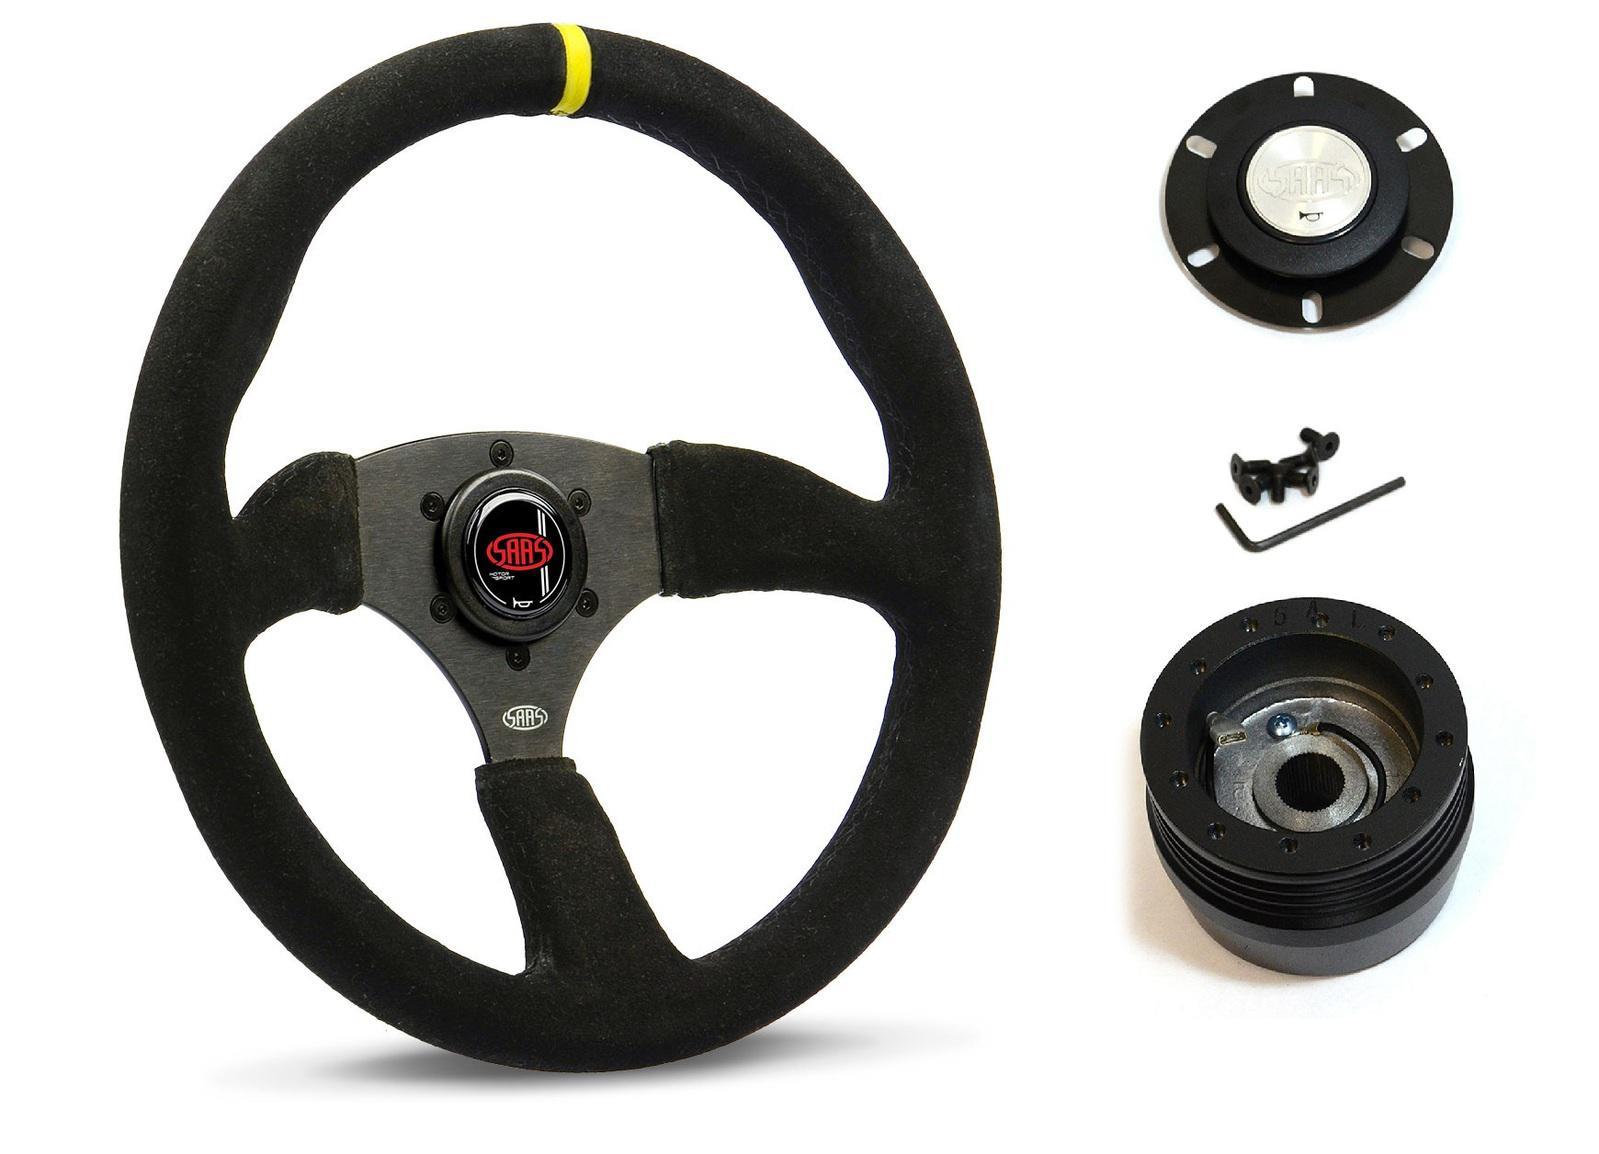 SAAS Steering Wheel Suede 14" ADR Tokyo Motorsport Black Spoke + Indicator SWMS2 and SAAS boss kit for Holden Nova LG 1993-1997